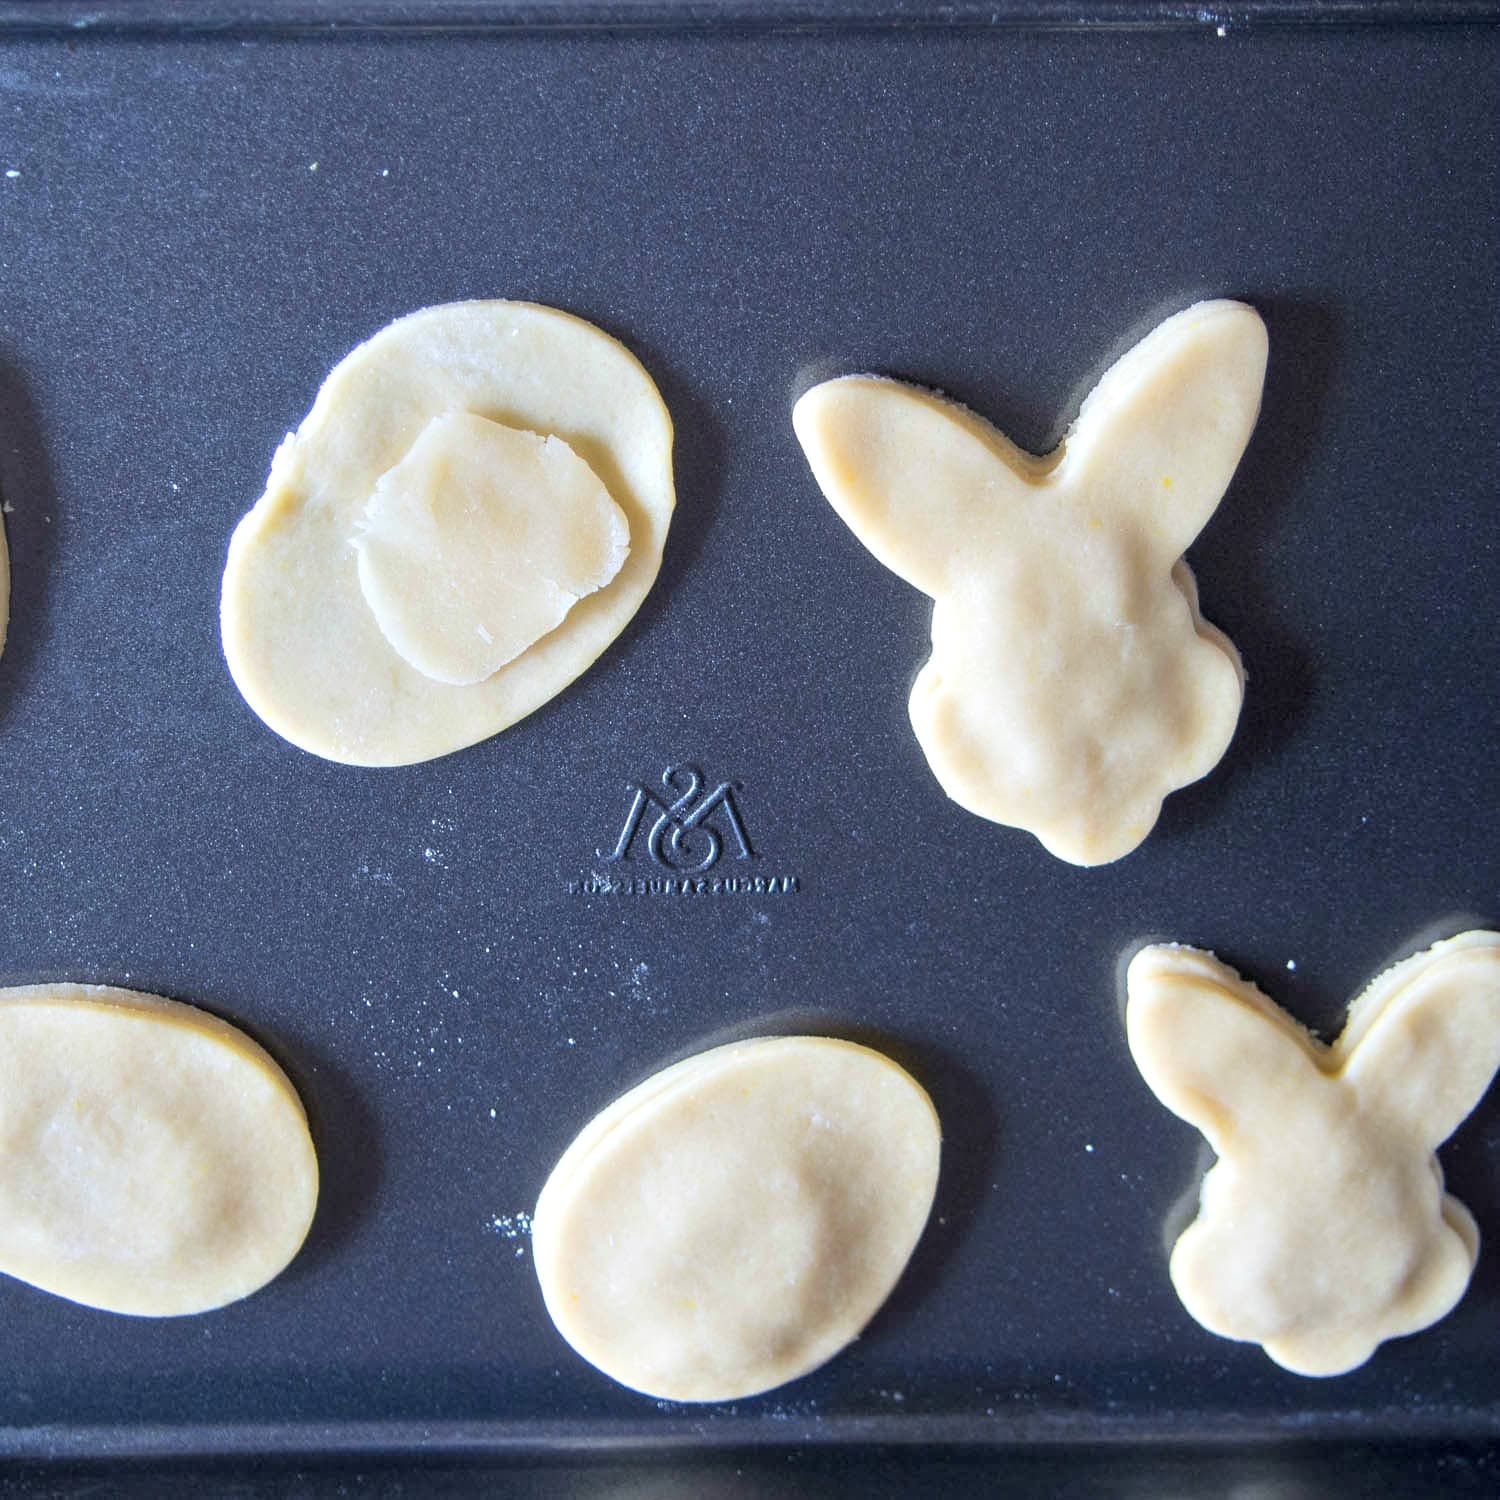 Making Figolli Cookies